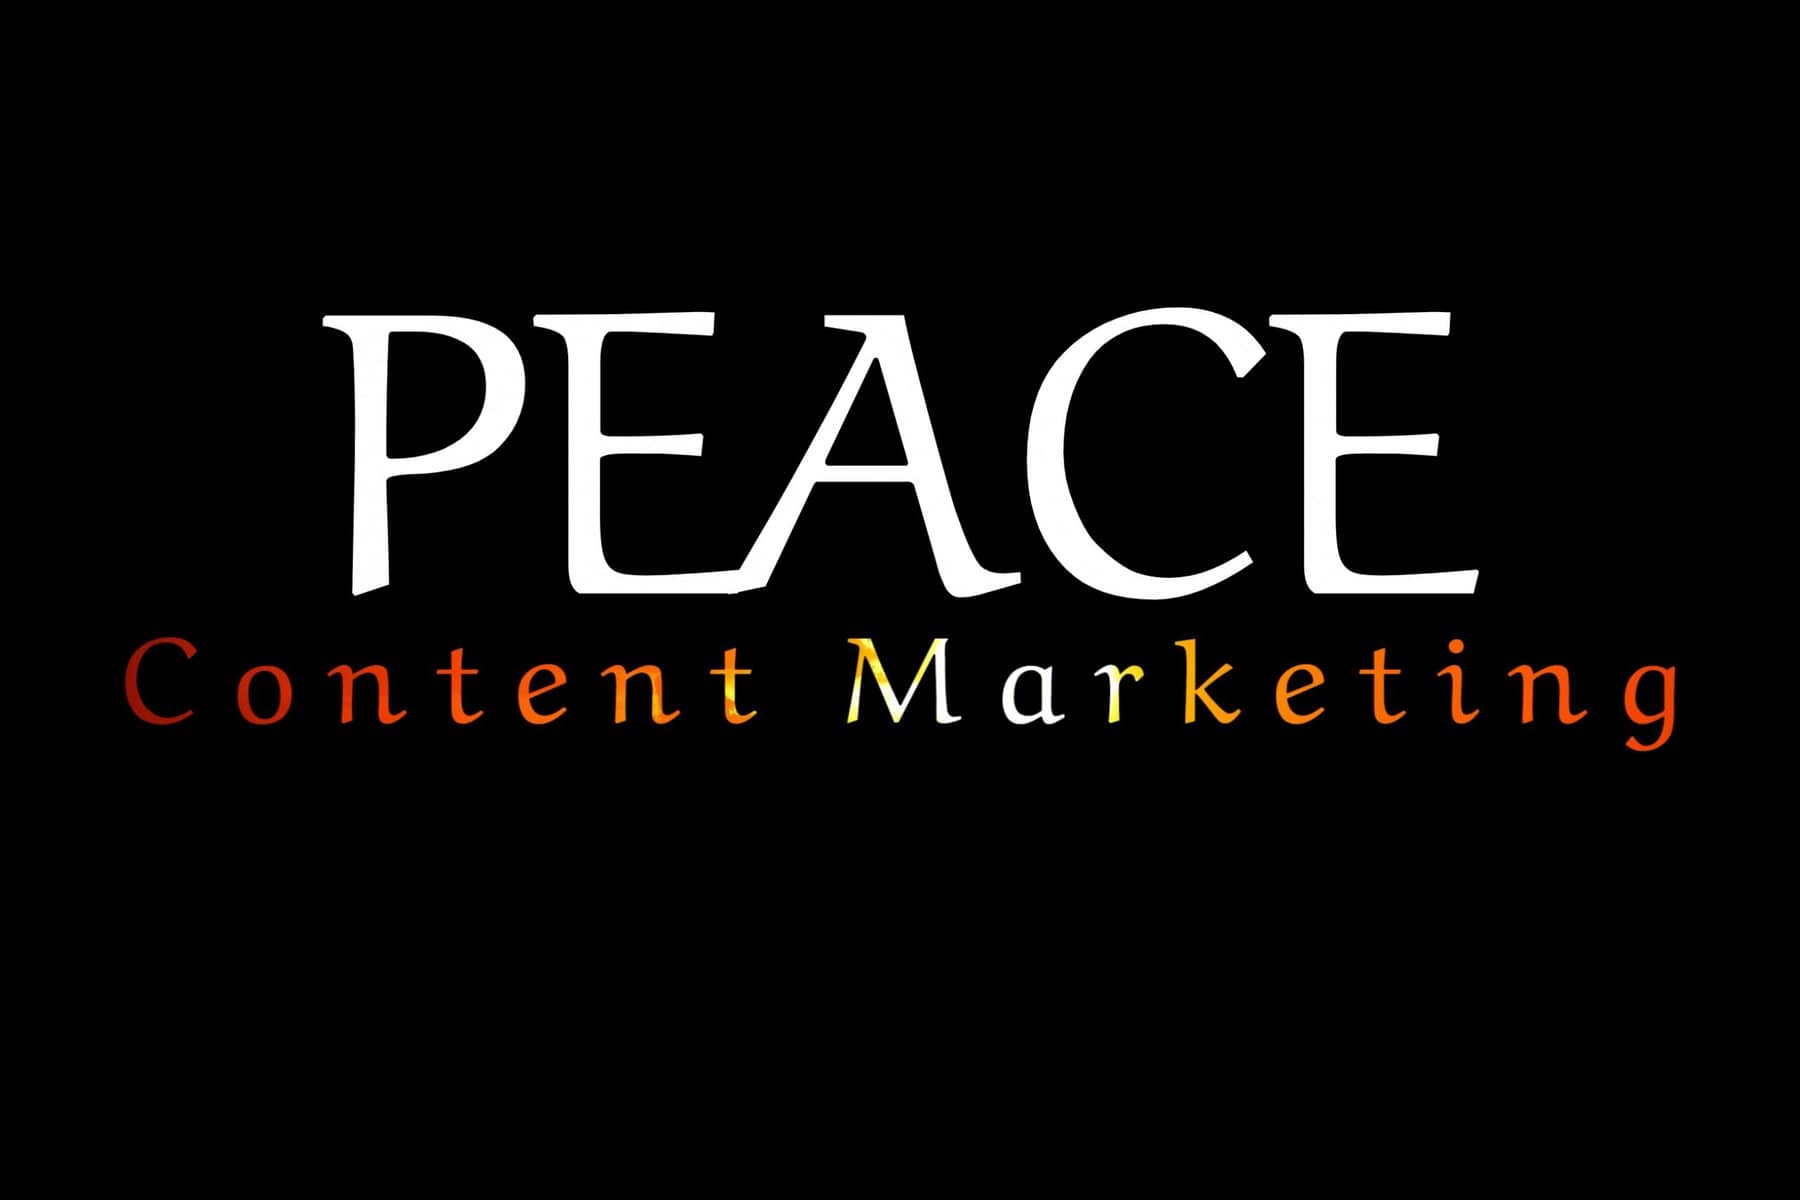 PEACE Content Marketing